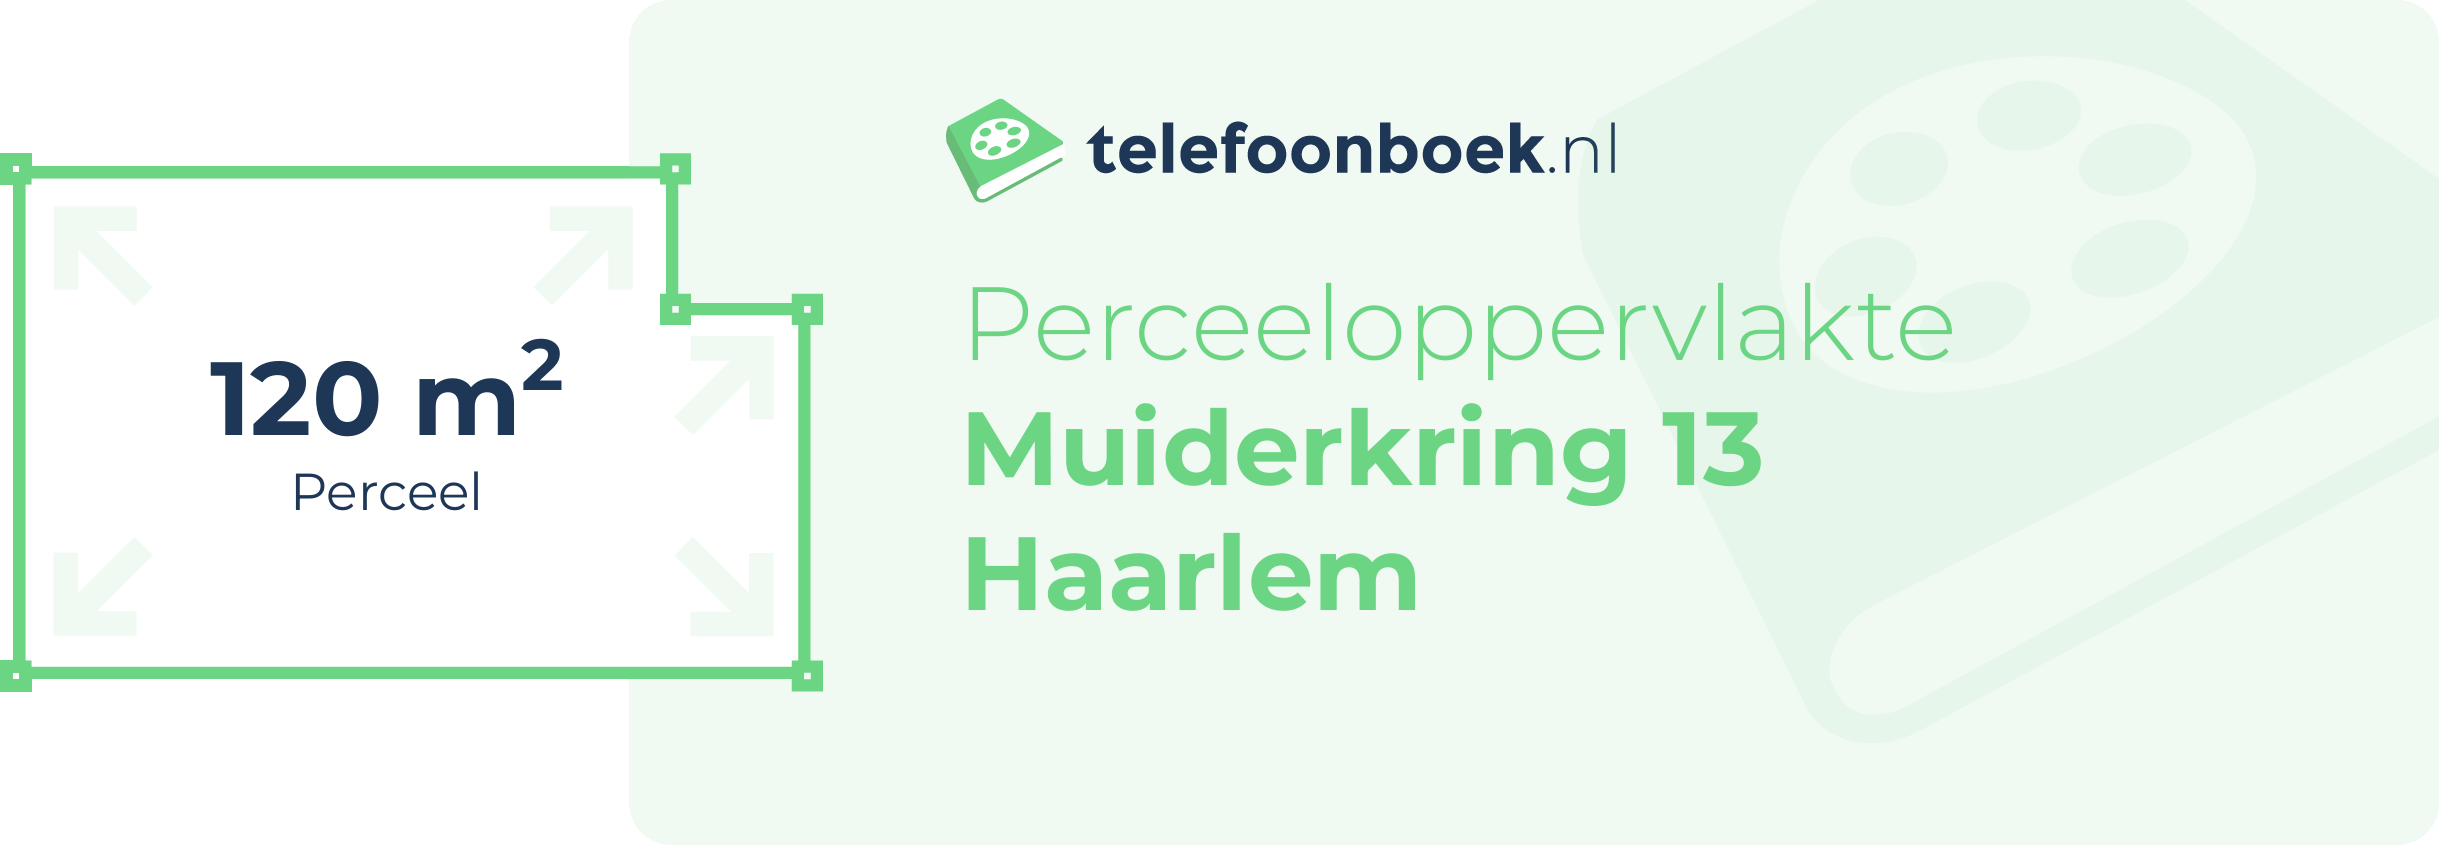 Perceeloppervlakte Muiderkring 13 Haarlem